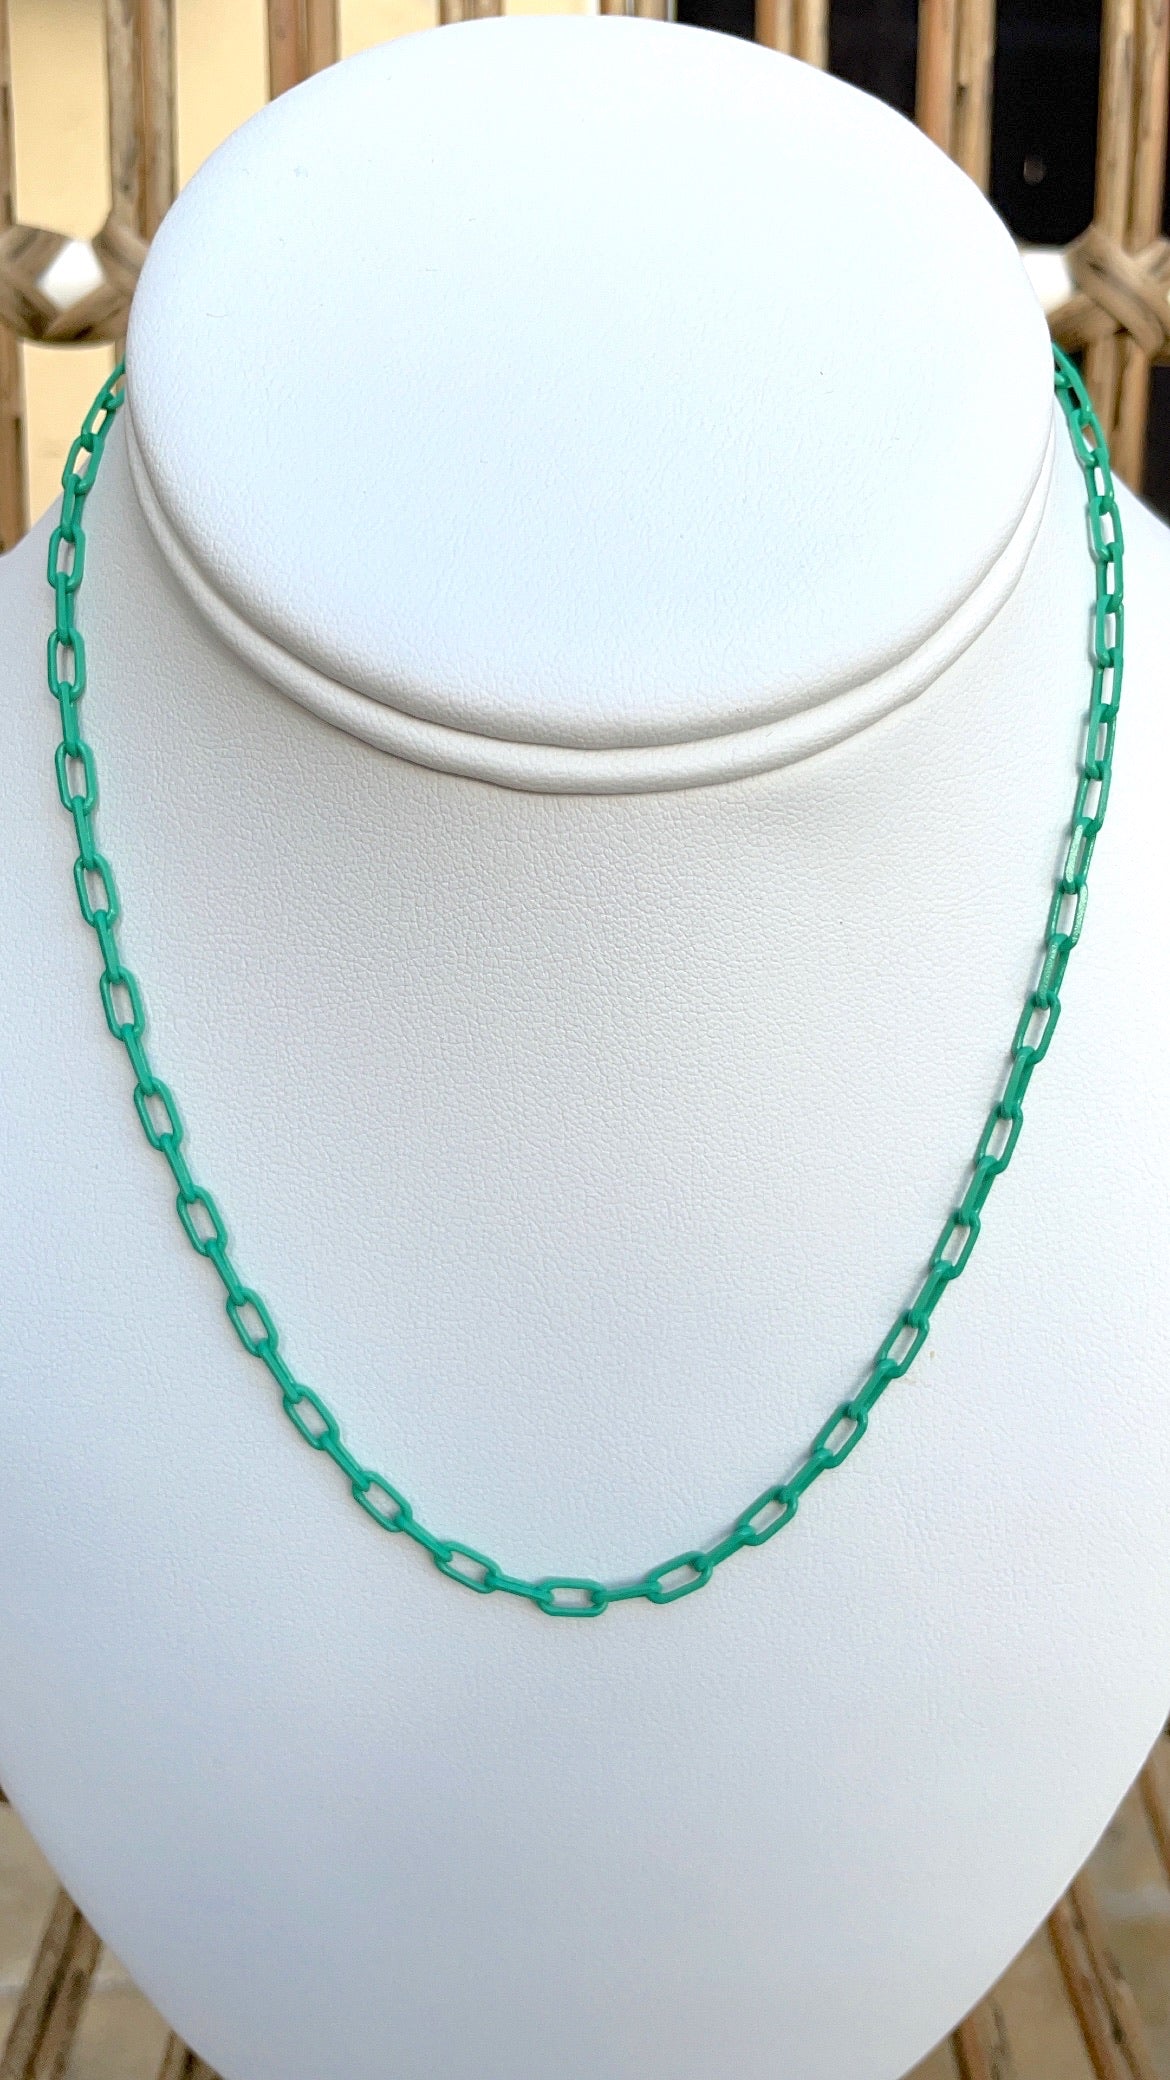 Colored paper clip necklaces